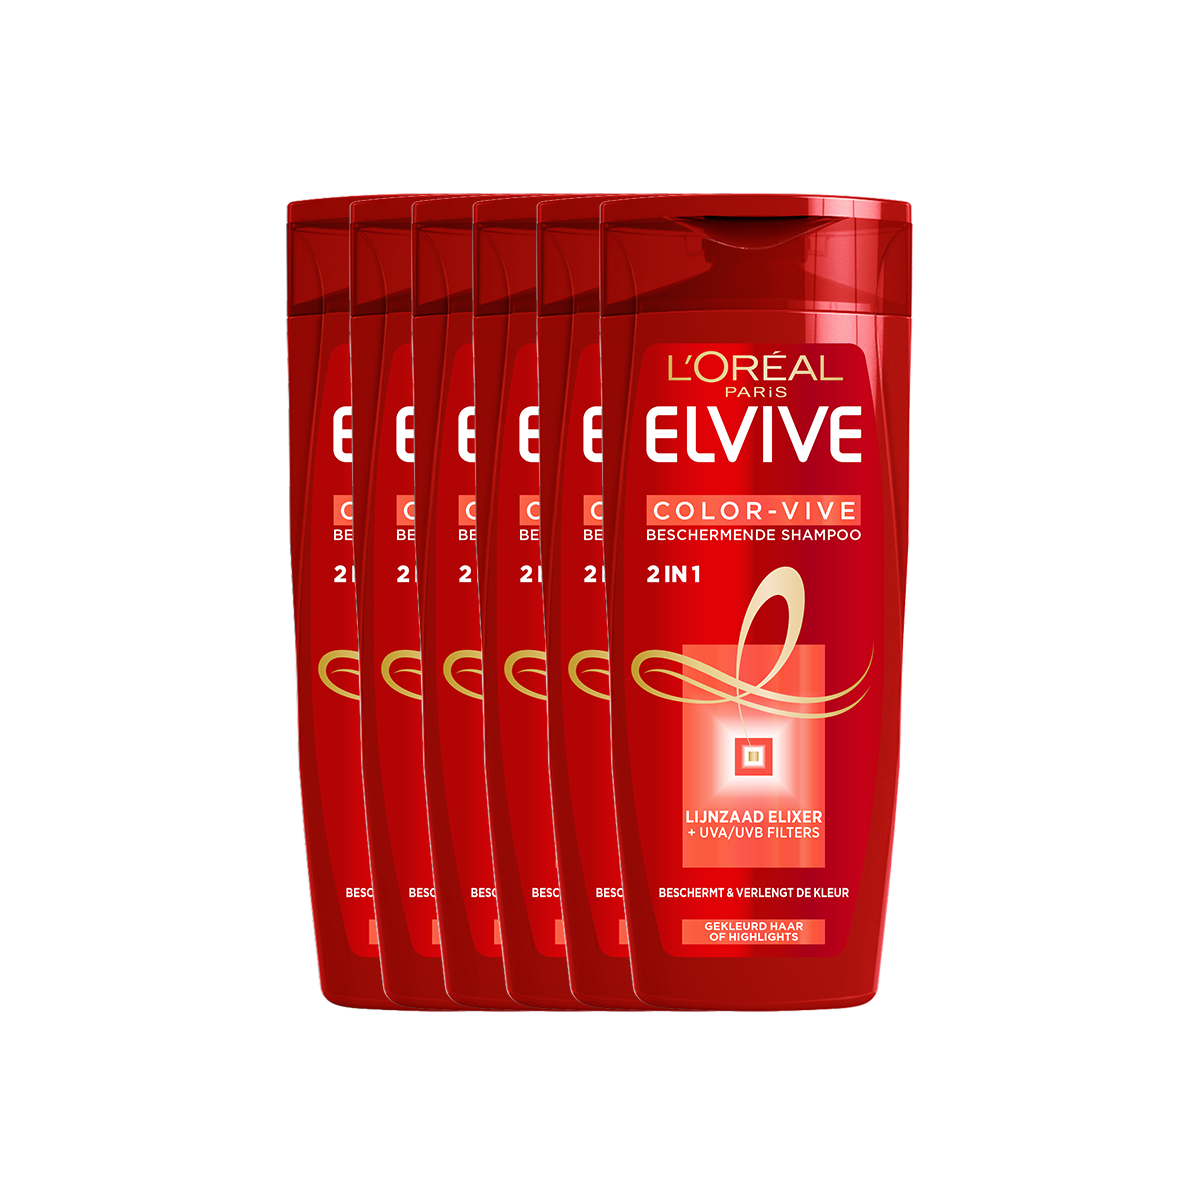 L'Oréal Elvive Color-Vive 2-in-1 Shampoo 6x 250ml